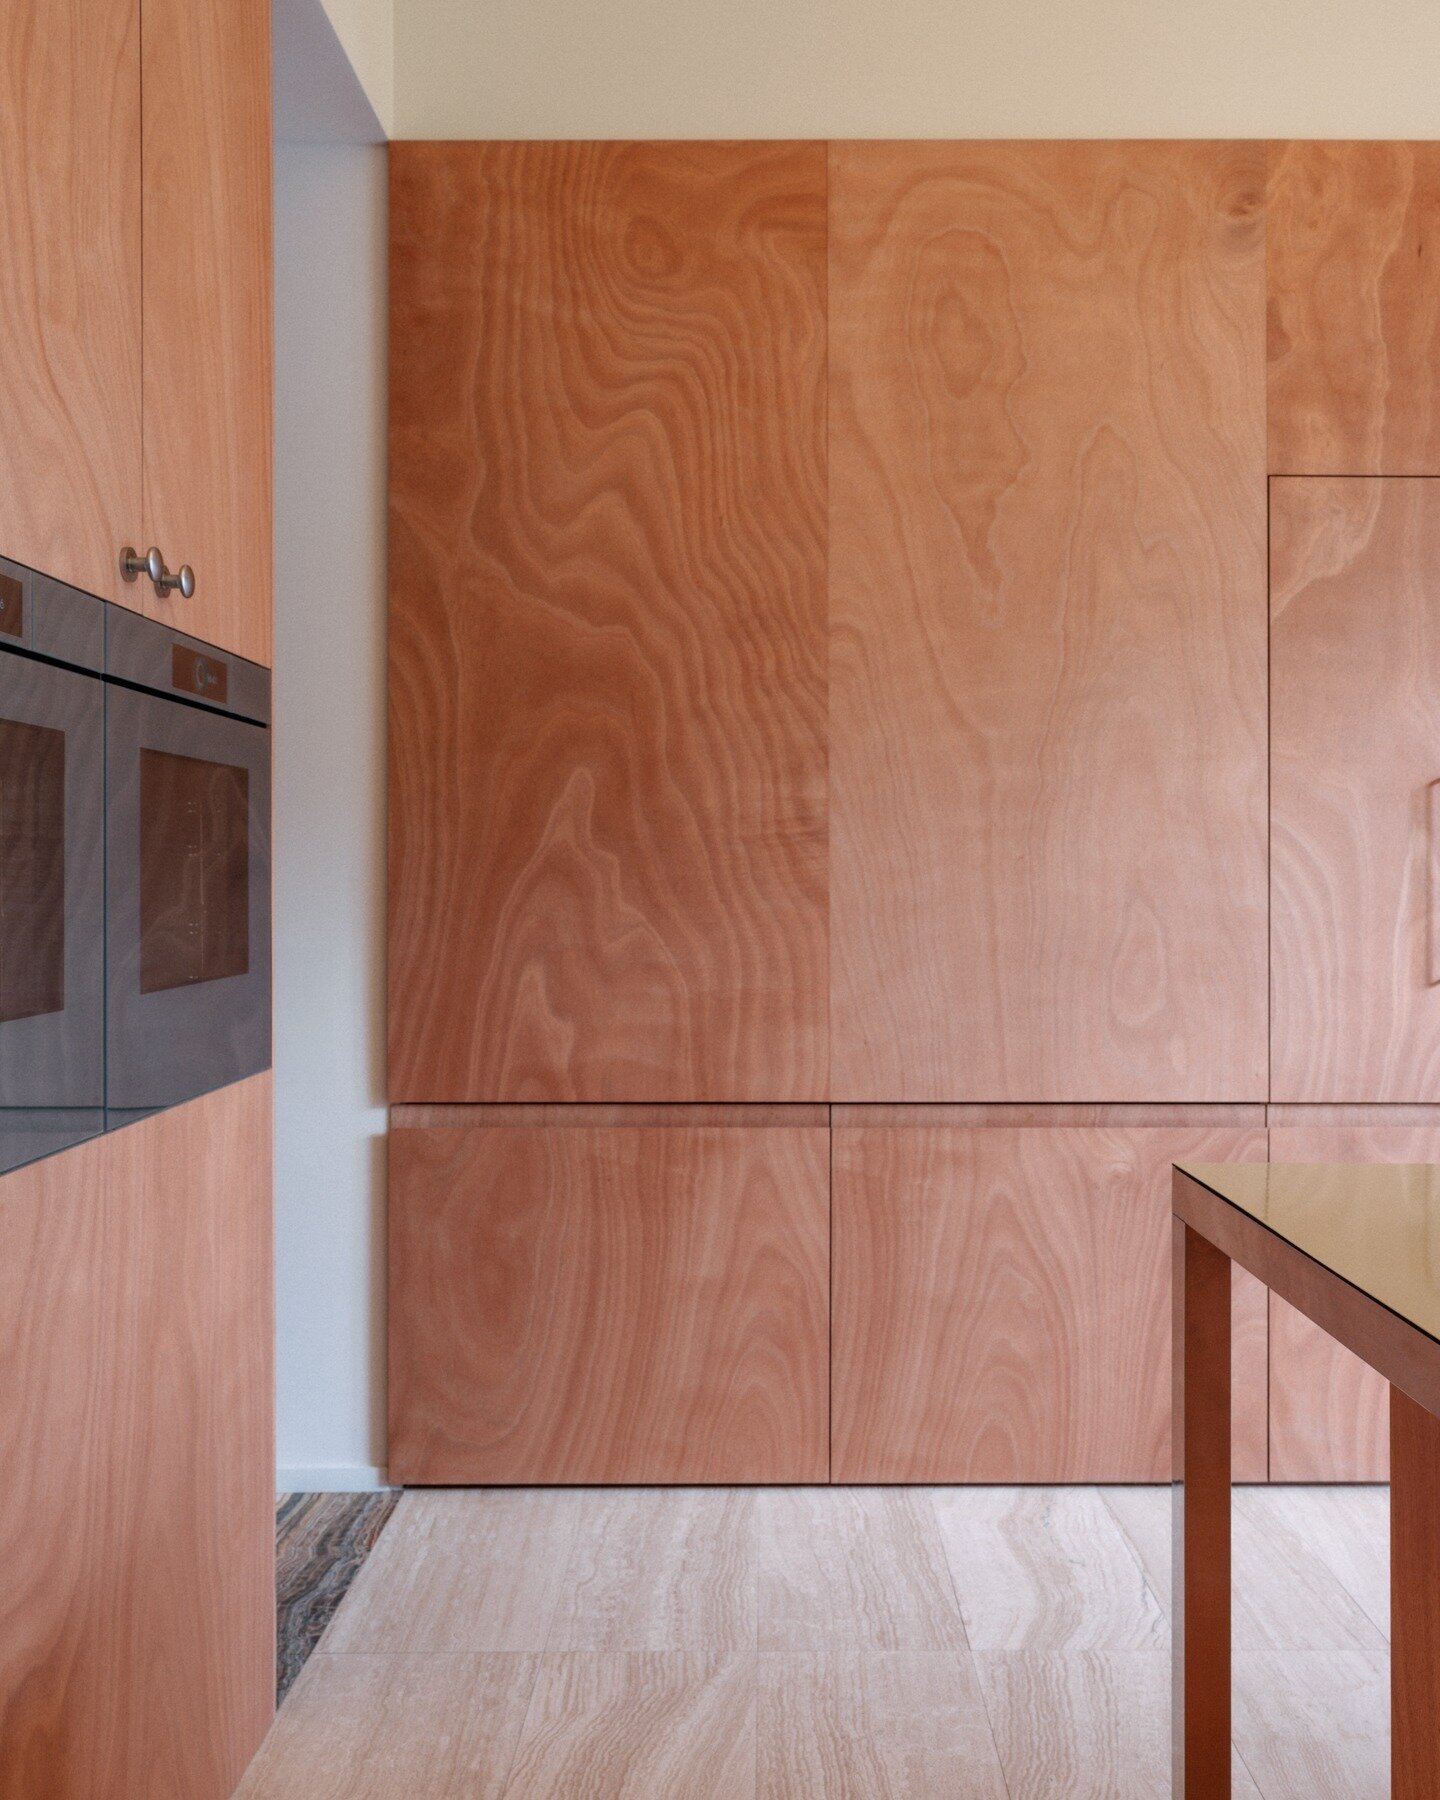 Matins lumineux et minimalistes 🌞🍃
💡 @bureausamuelgenet
📸 @giaimemeloni

#interiordesign #interiors #architecture #architect #decor #taste #paris #fineinteriors #minimalist #cuisine #kitchen #marbre#aluminium #bois #ınstagood #details